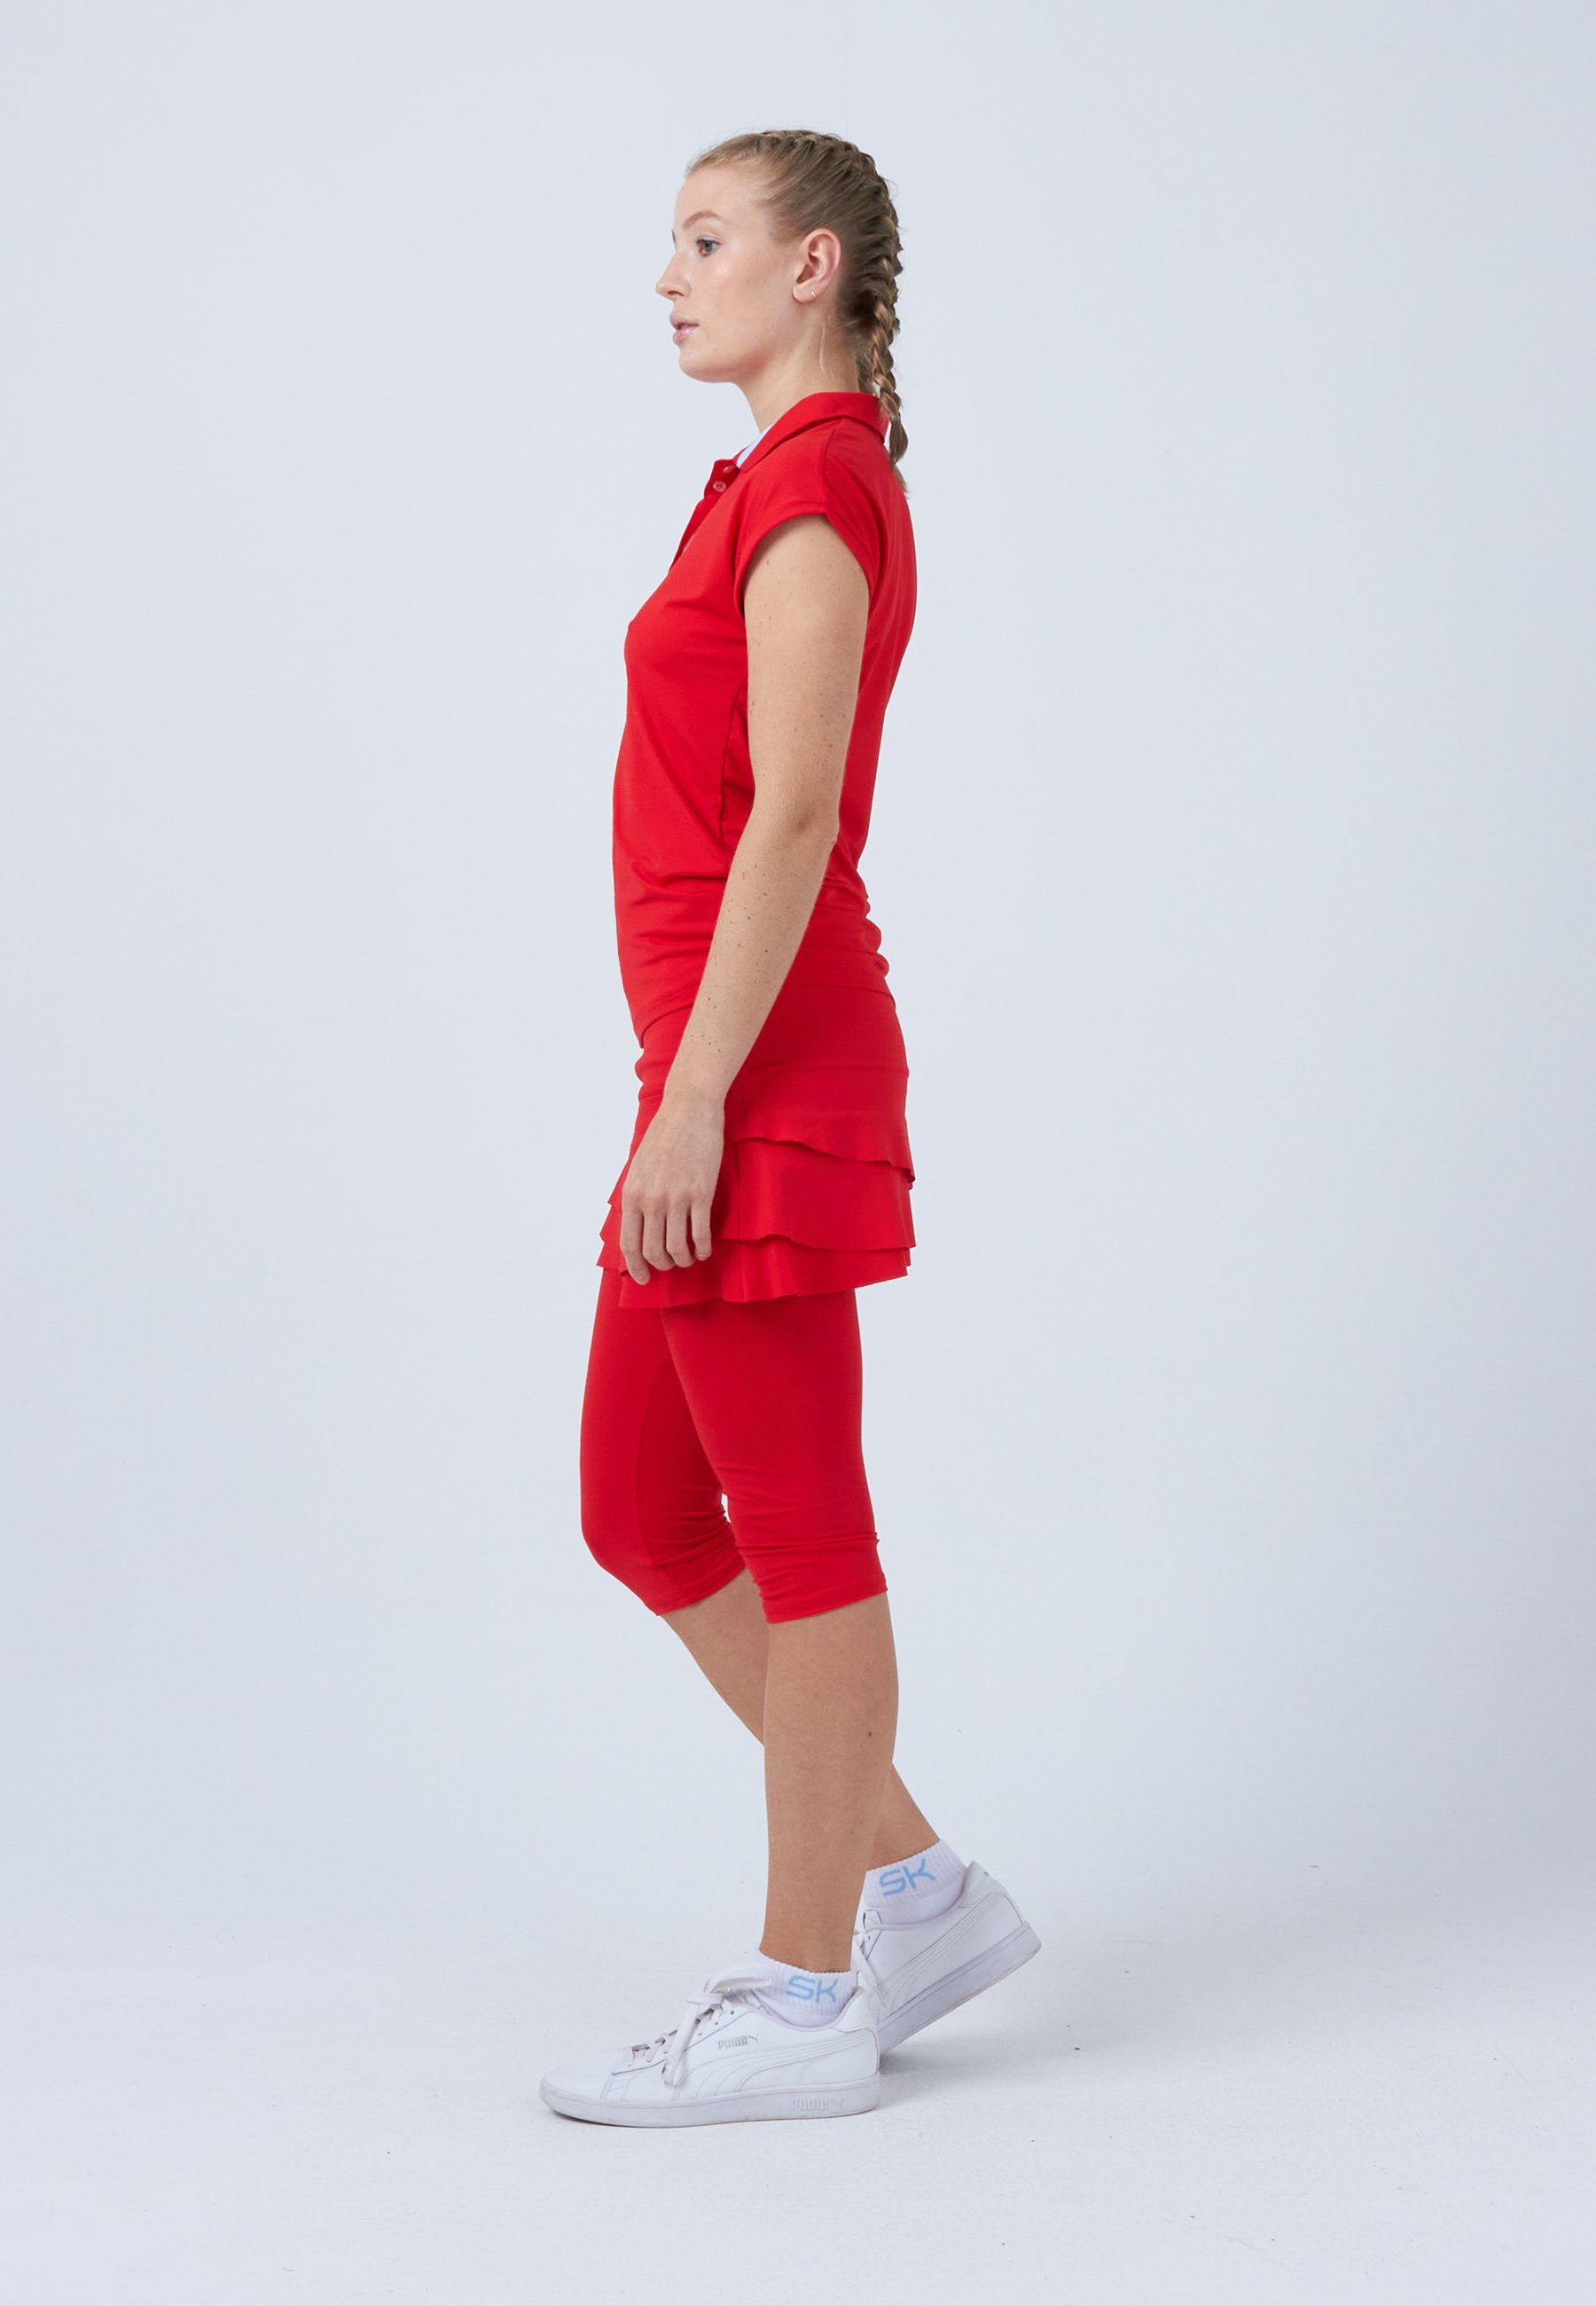 SPORTKIND Funktionsshirt Golf Polo Shirt Loose-Fit Mädchen & Damen rot | Funktionsshirts